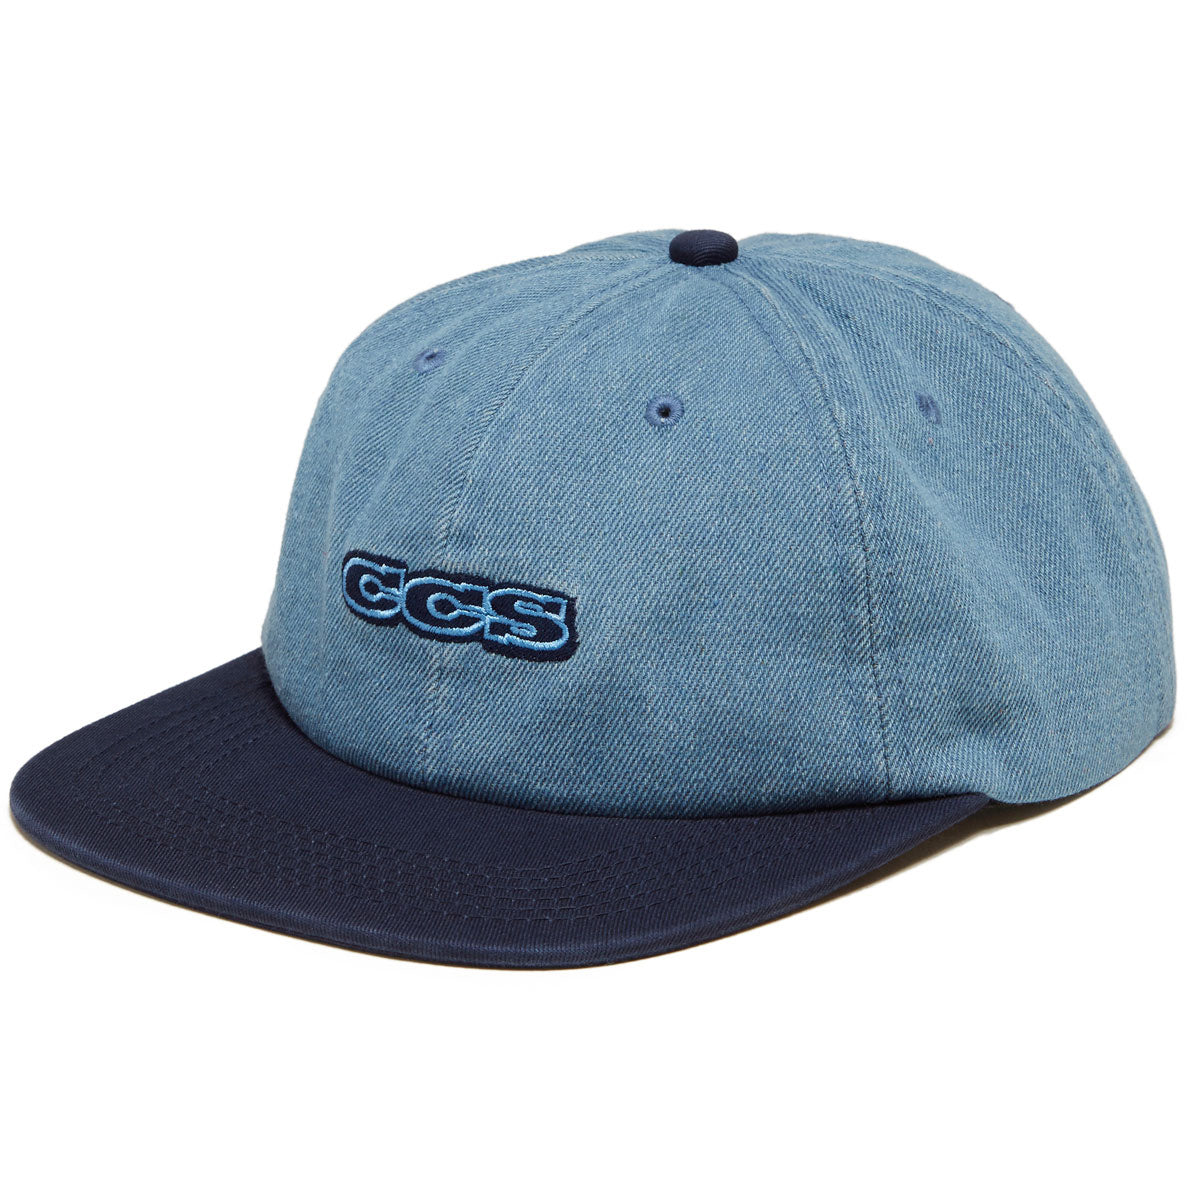 CCS 96 Logo Denim Snapback Hat - Medium Wash image 1